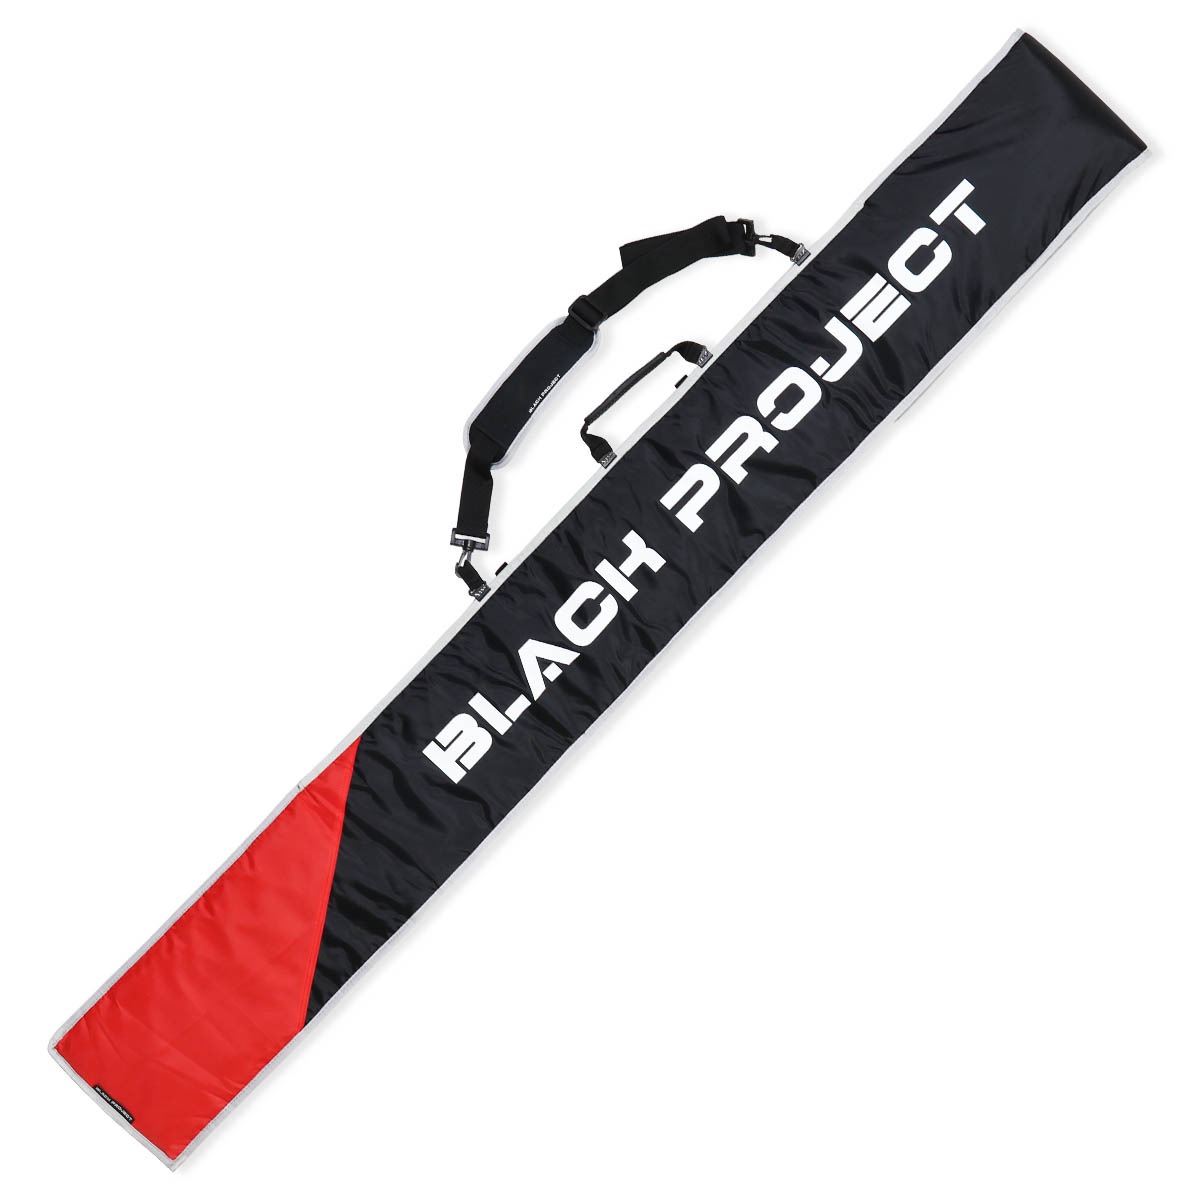 Black Project paddle bag